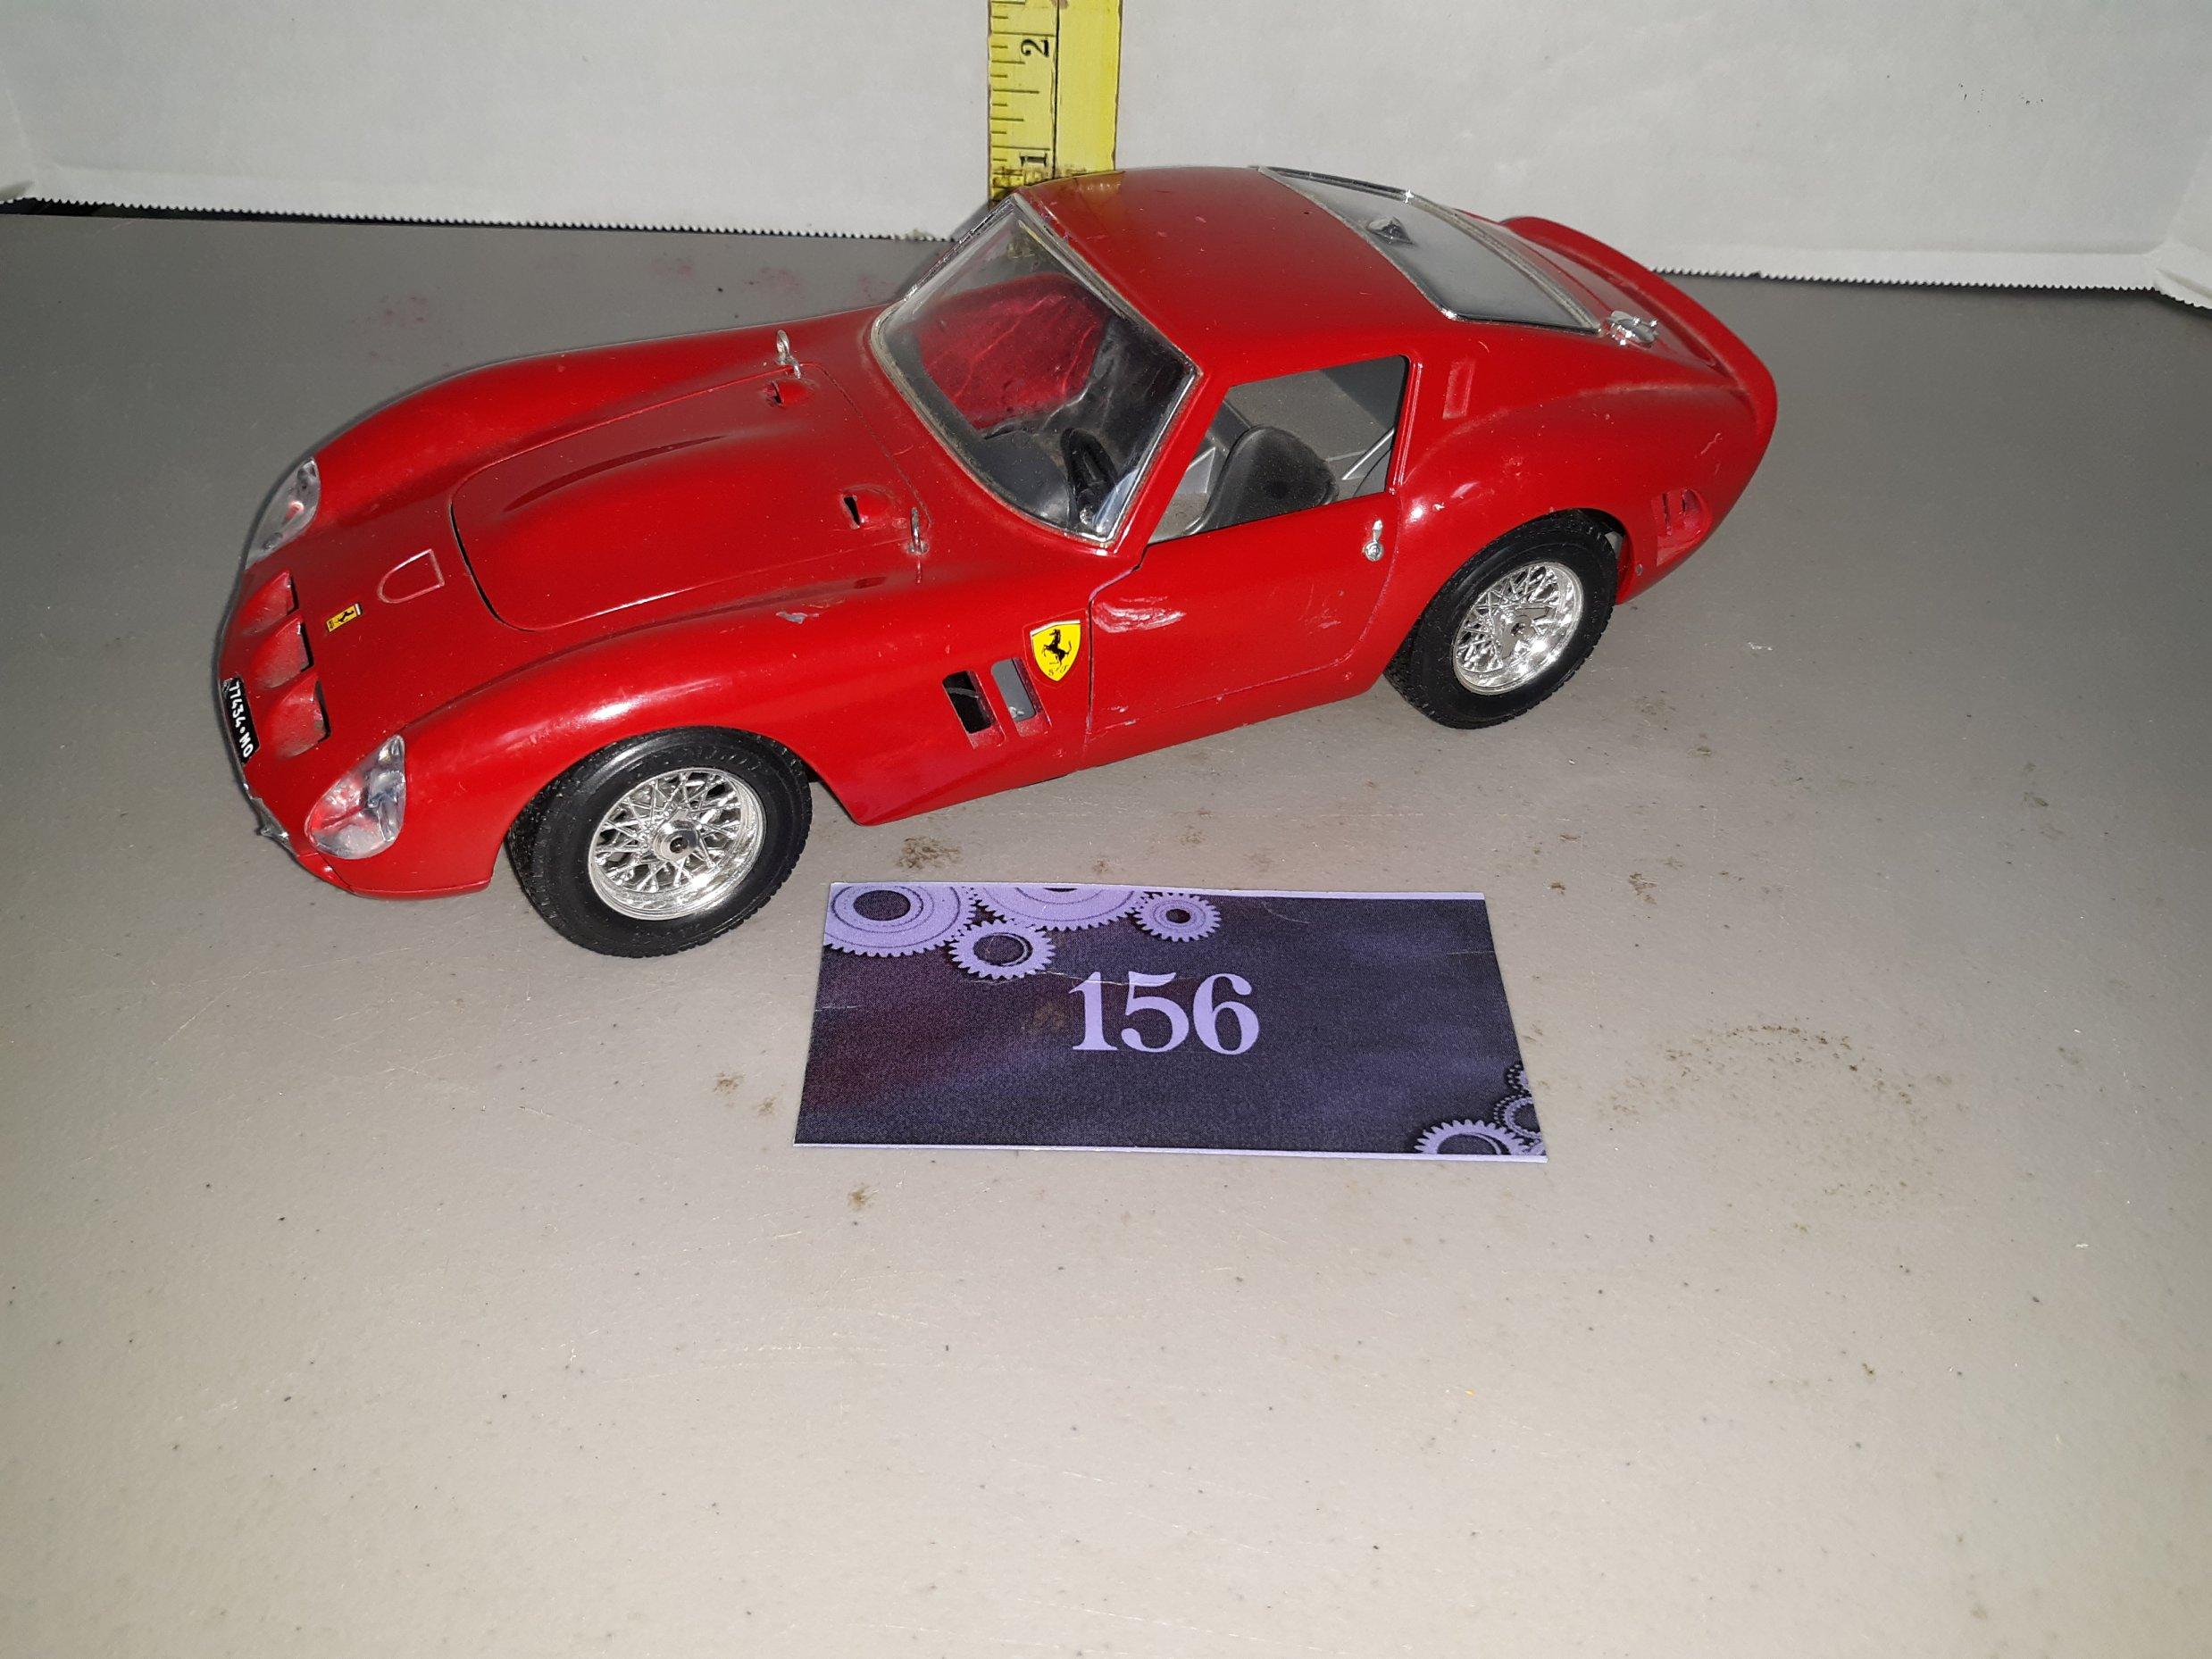 Ferrari Car, Made in Italy